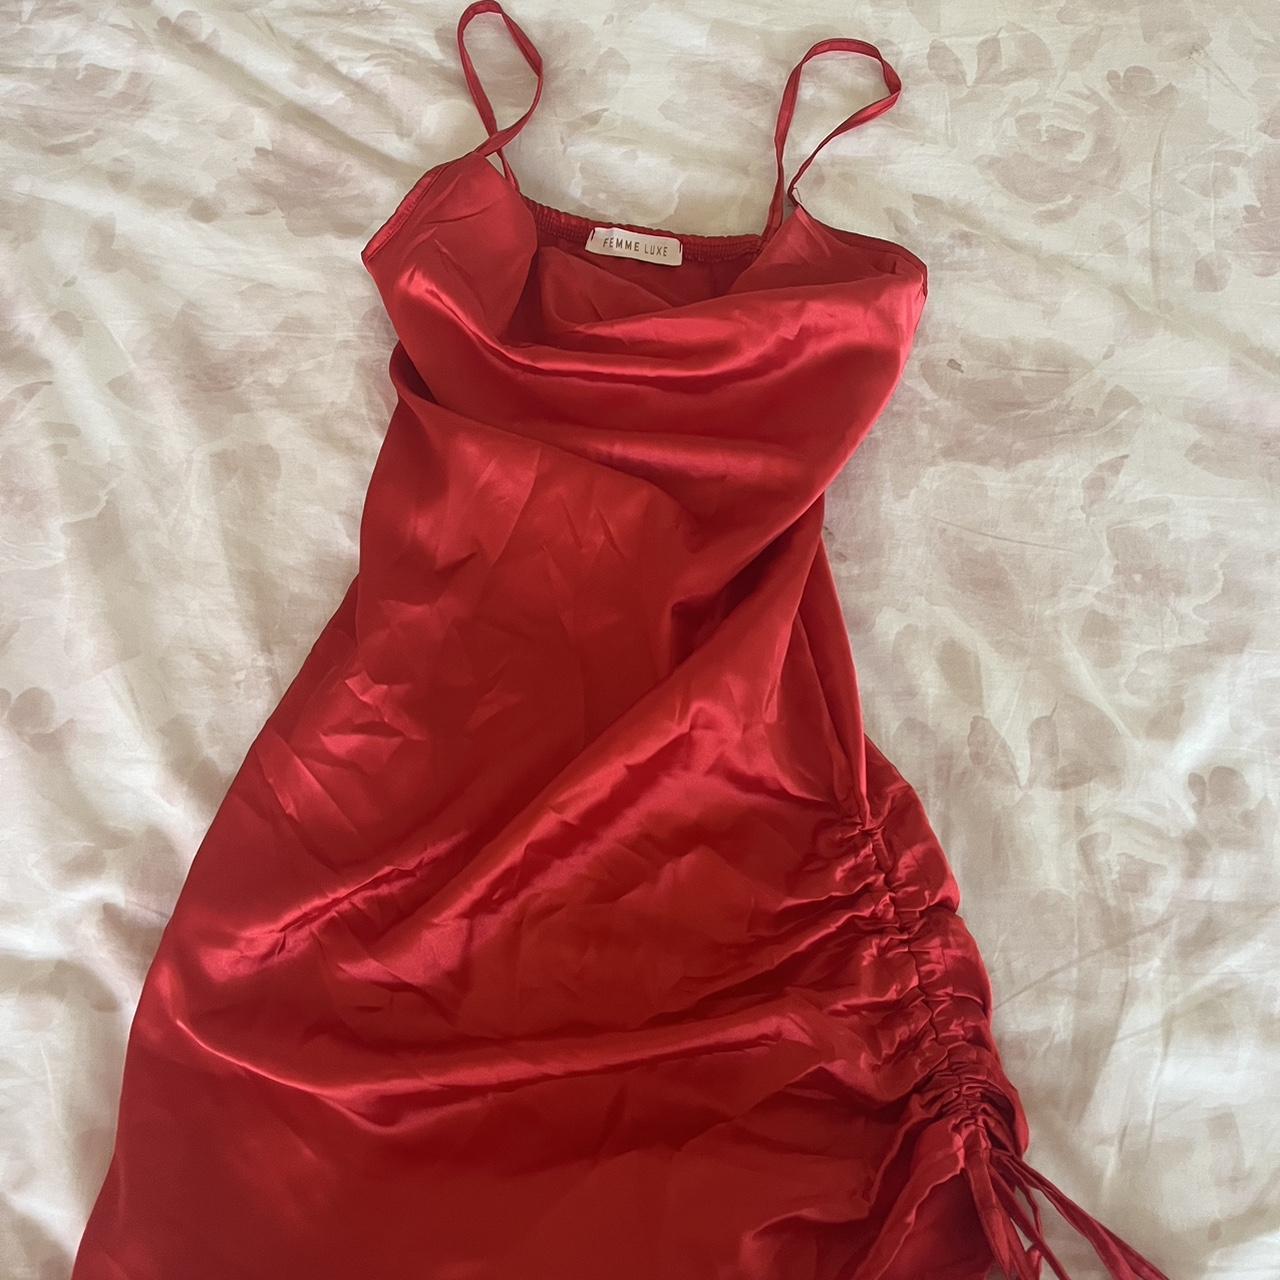 Femme Luxe Women's Red Dress